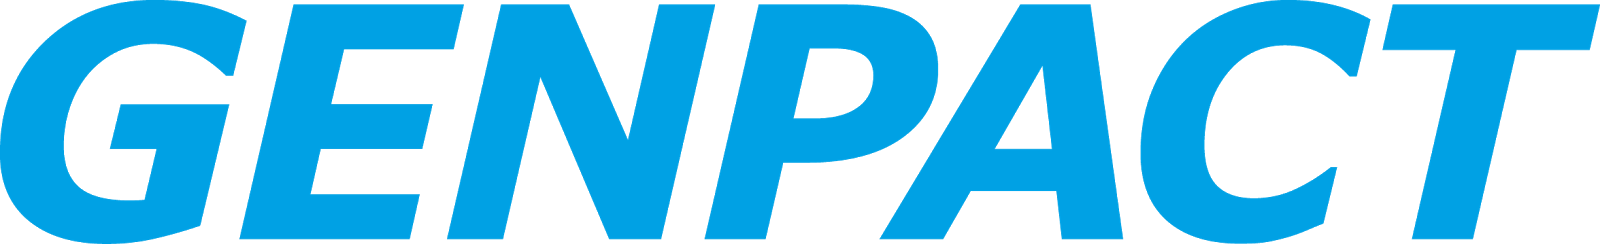 Primary Skills - Genpact Logo Transparent Background (1600x244)